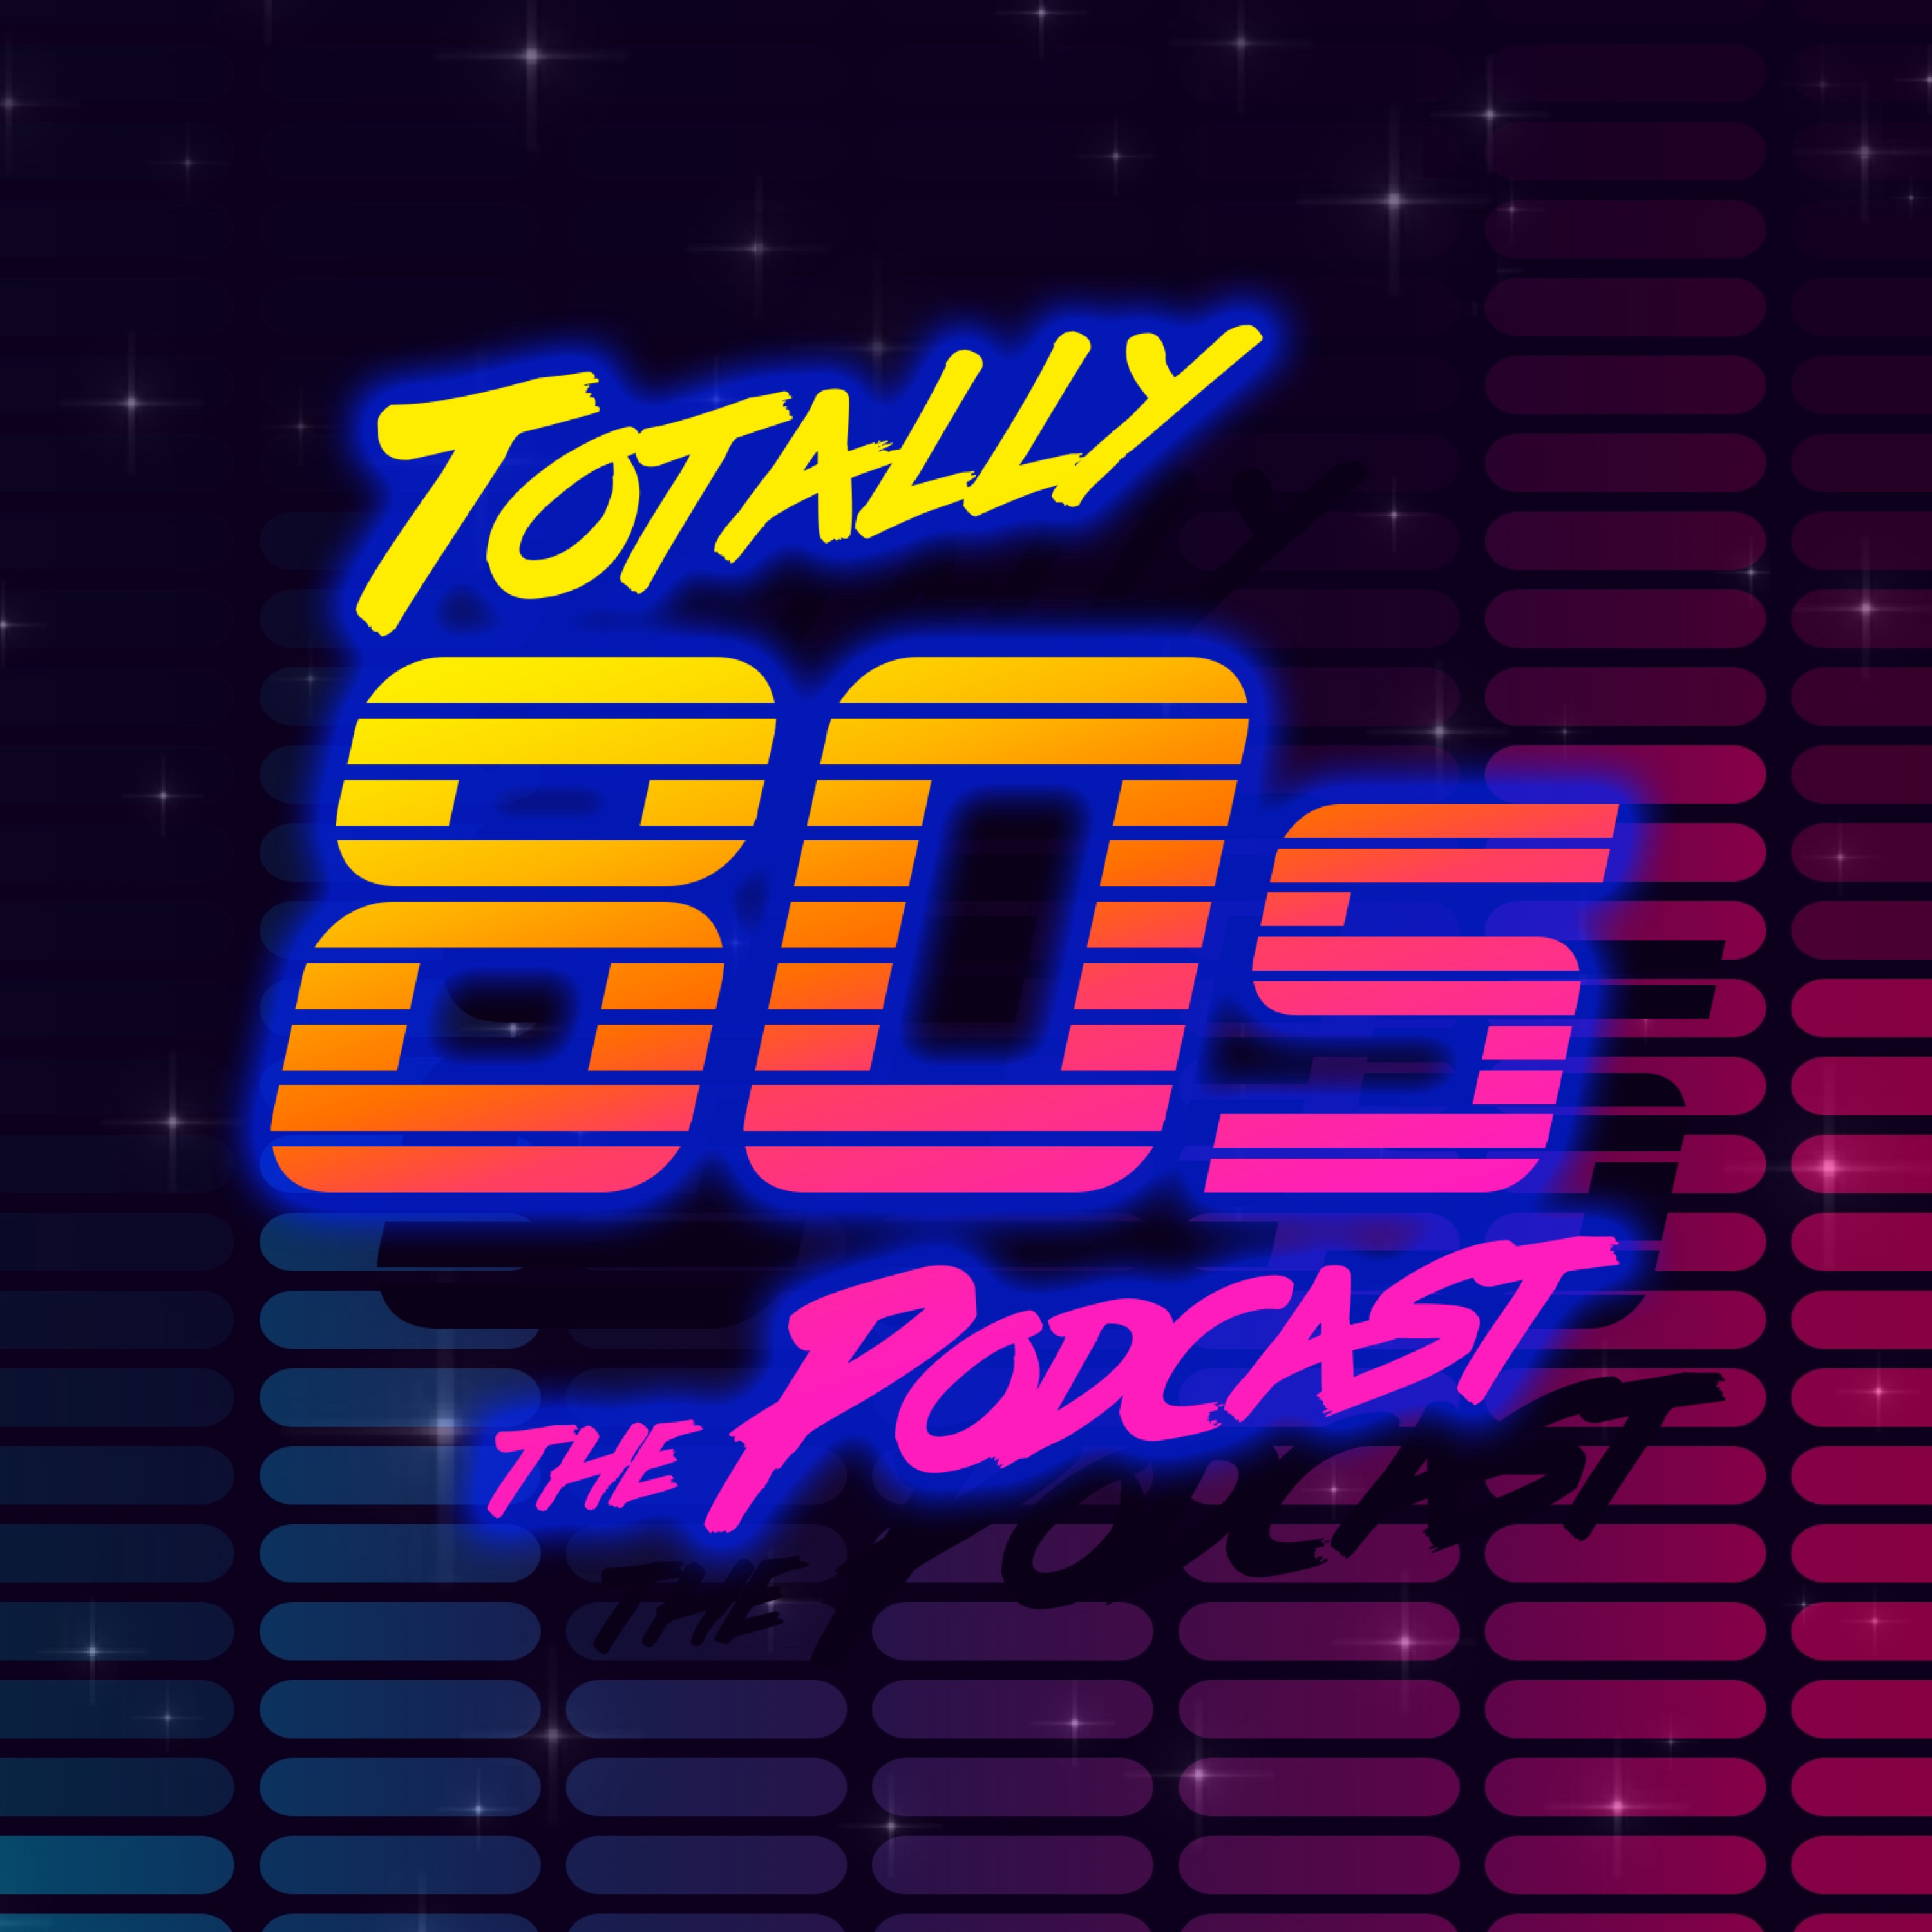 80s Podcast